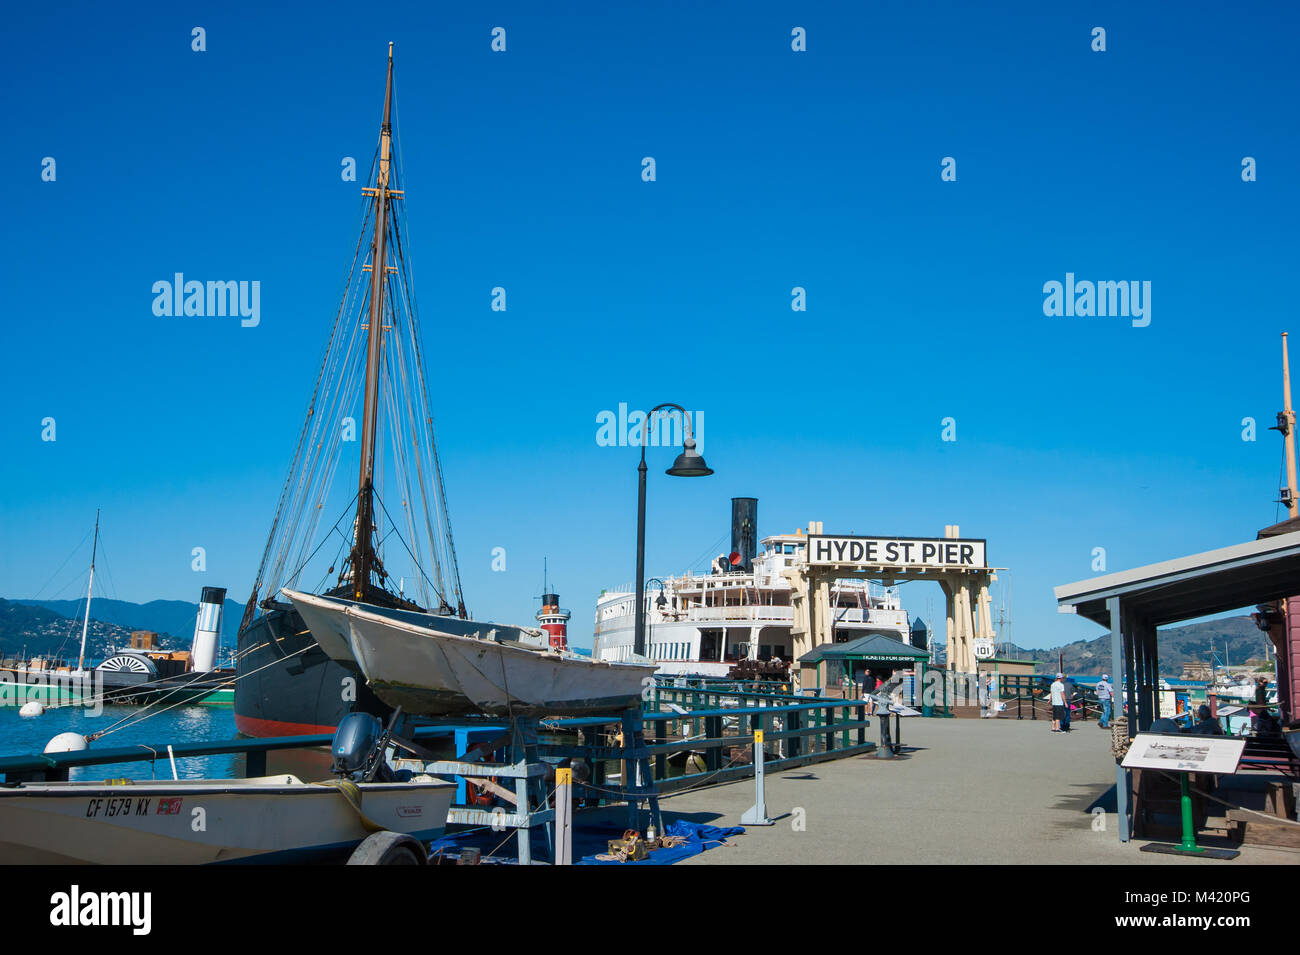 san Francisco, CA - February 03: Hyde Street Pier in San Francisco, CA Stock Photo